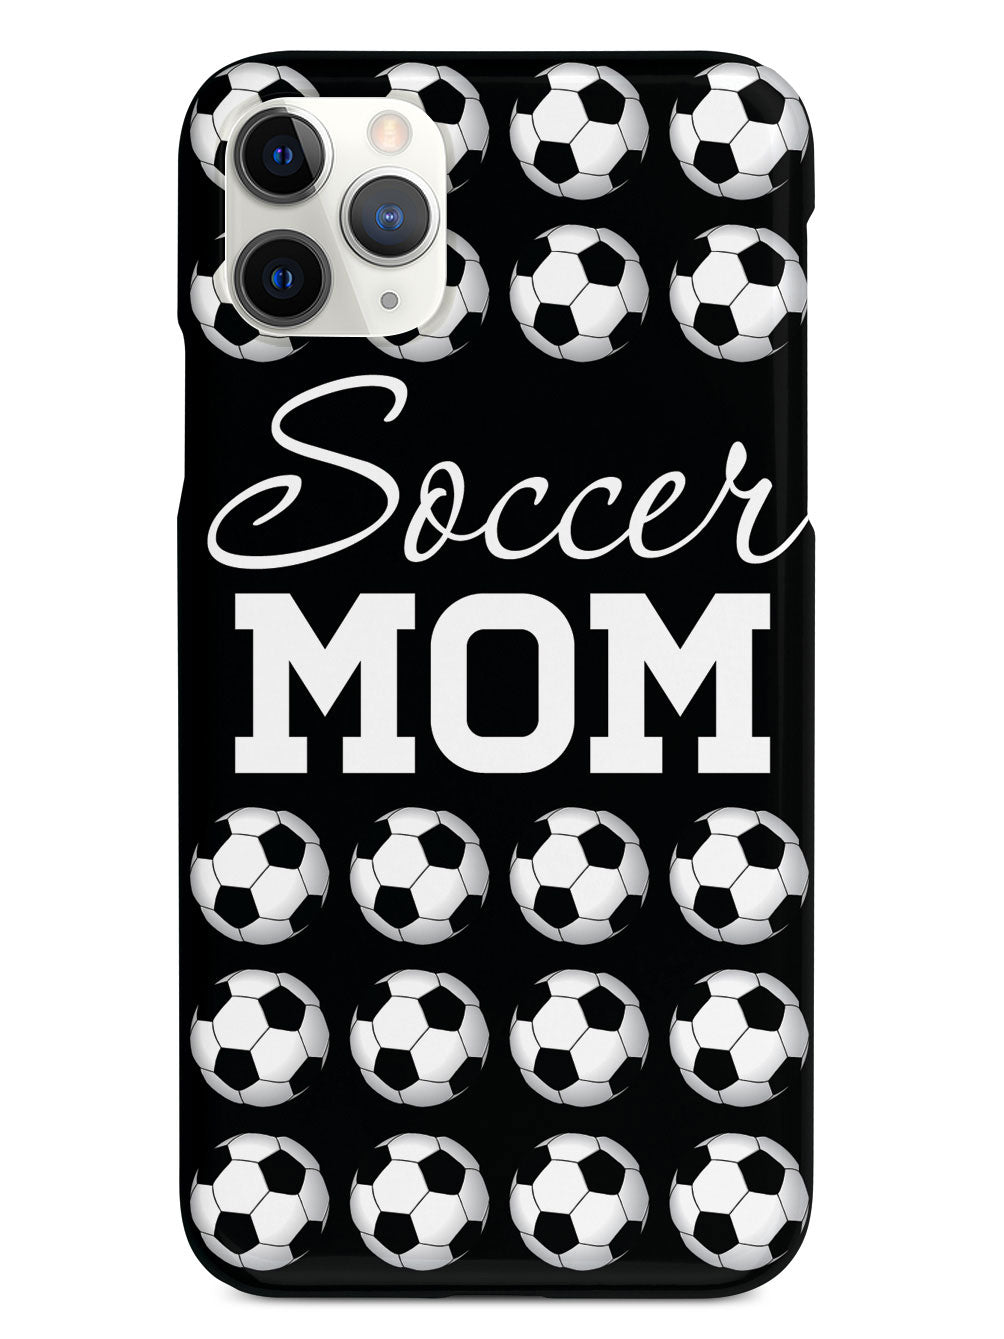 Soccer Mom Case